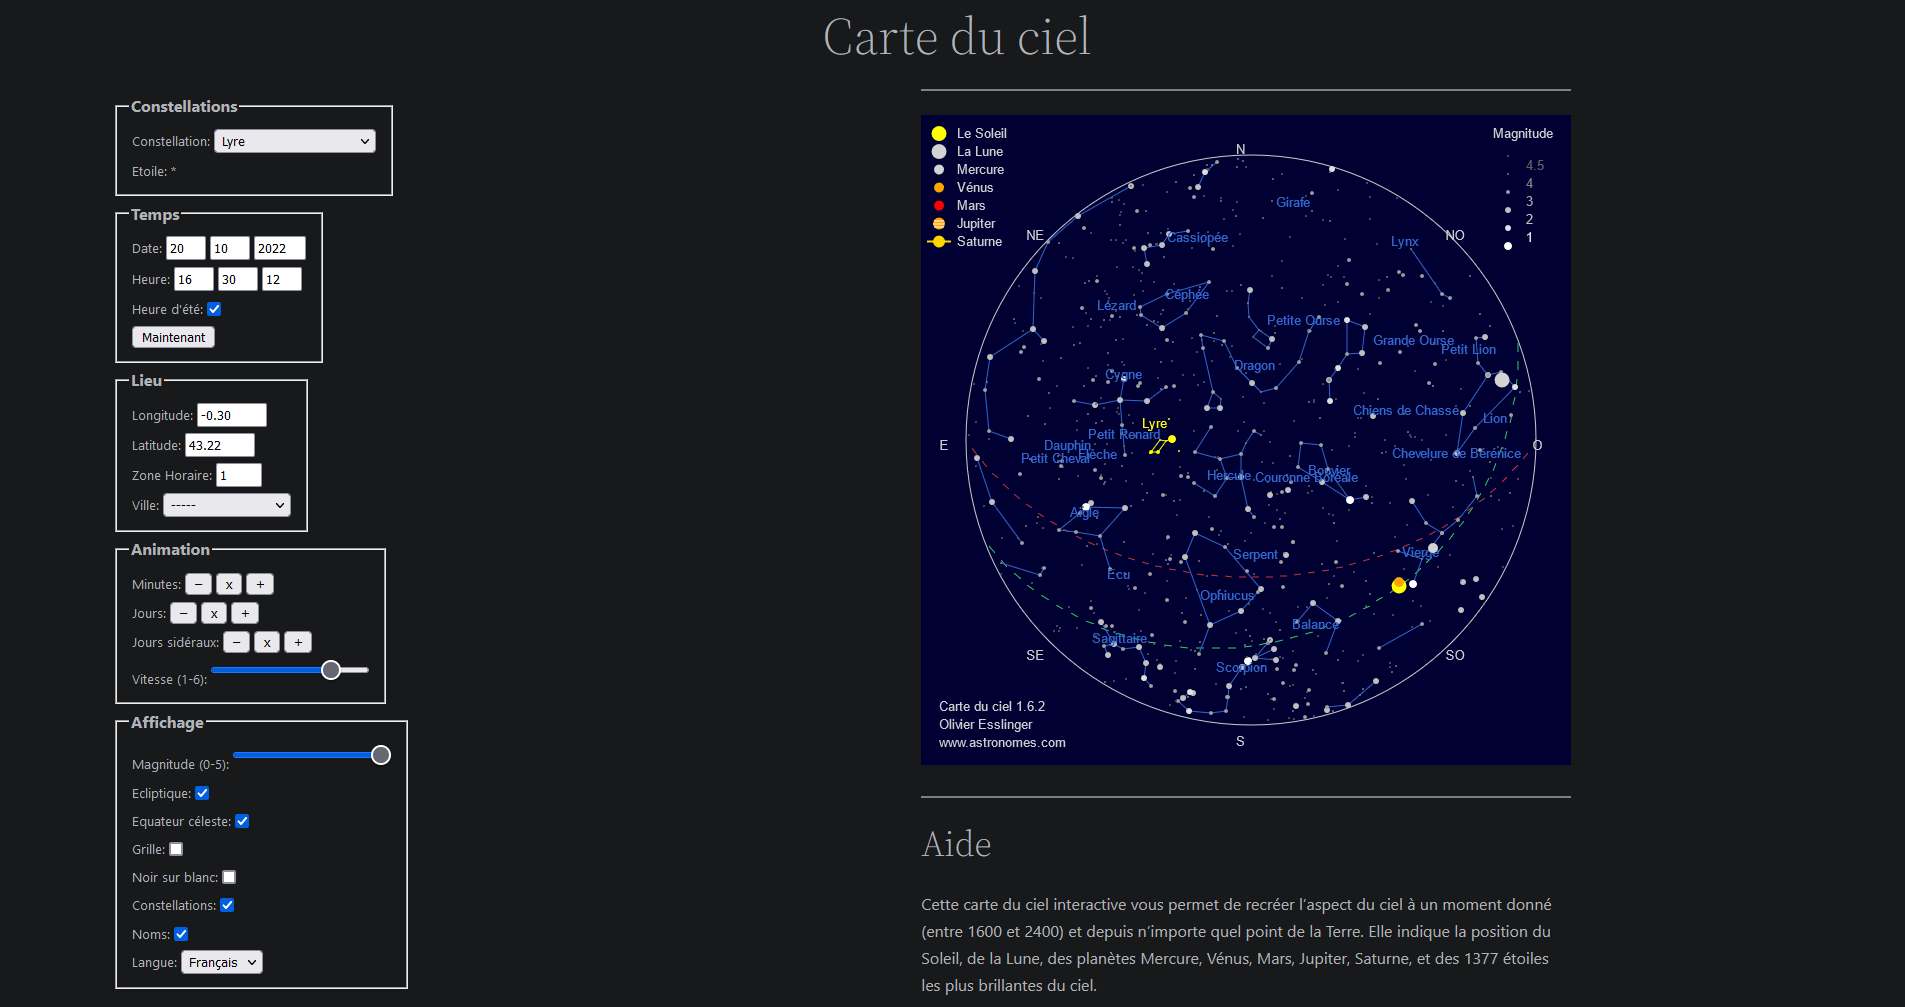 Carte du ciel interactive